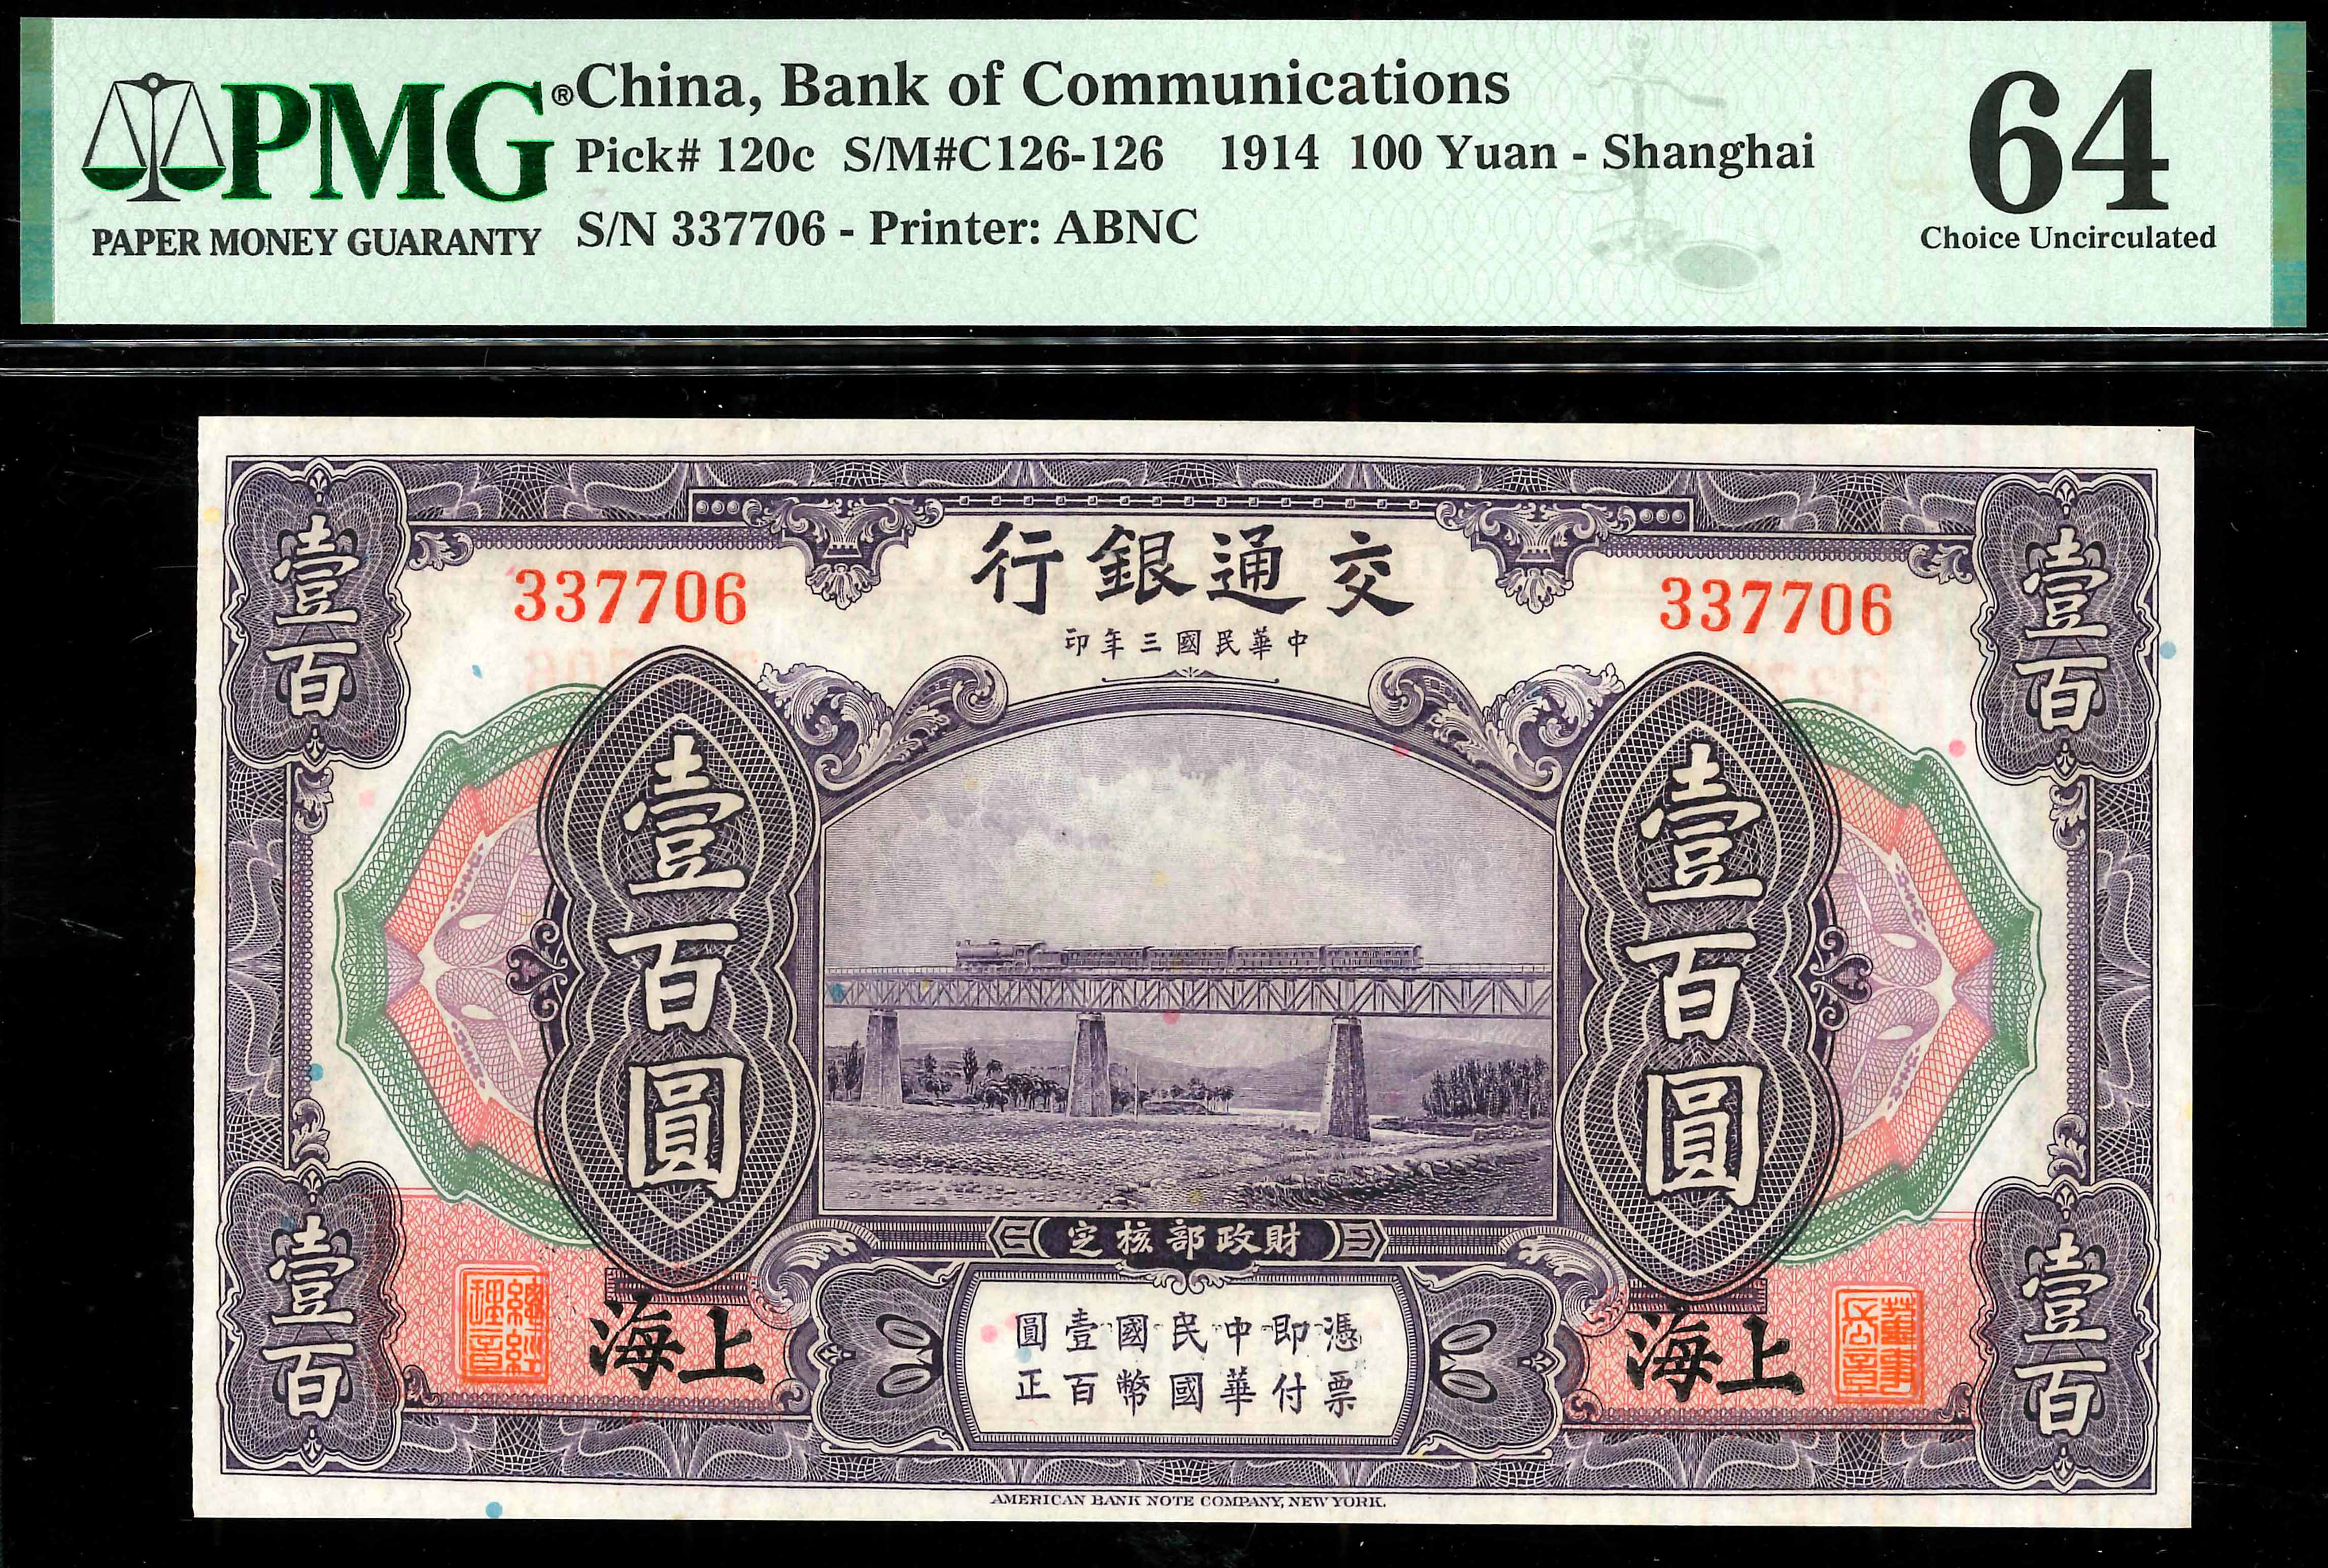 China, Bank of Communications, 1914, 100 Yuan, P-120c, S/N. 337706